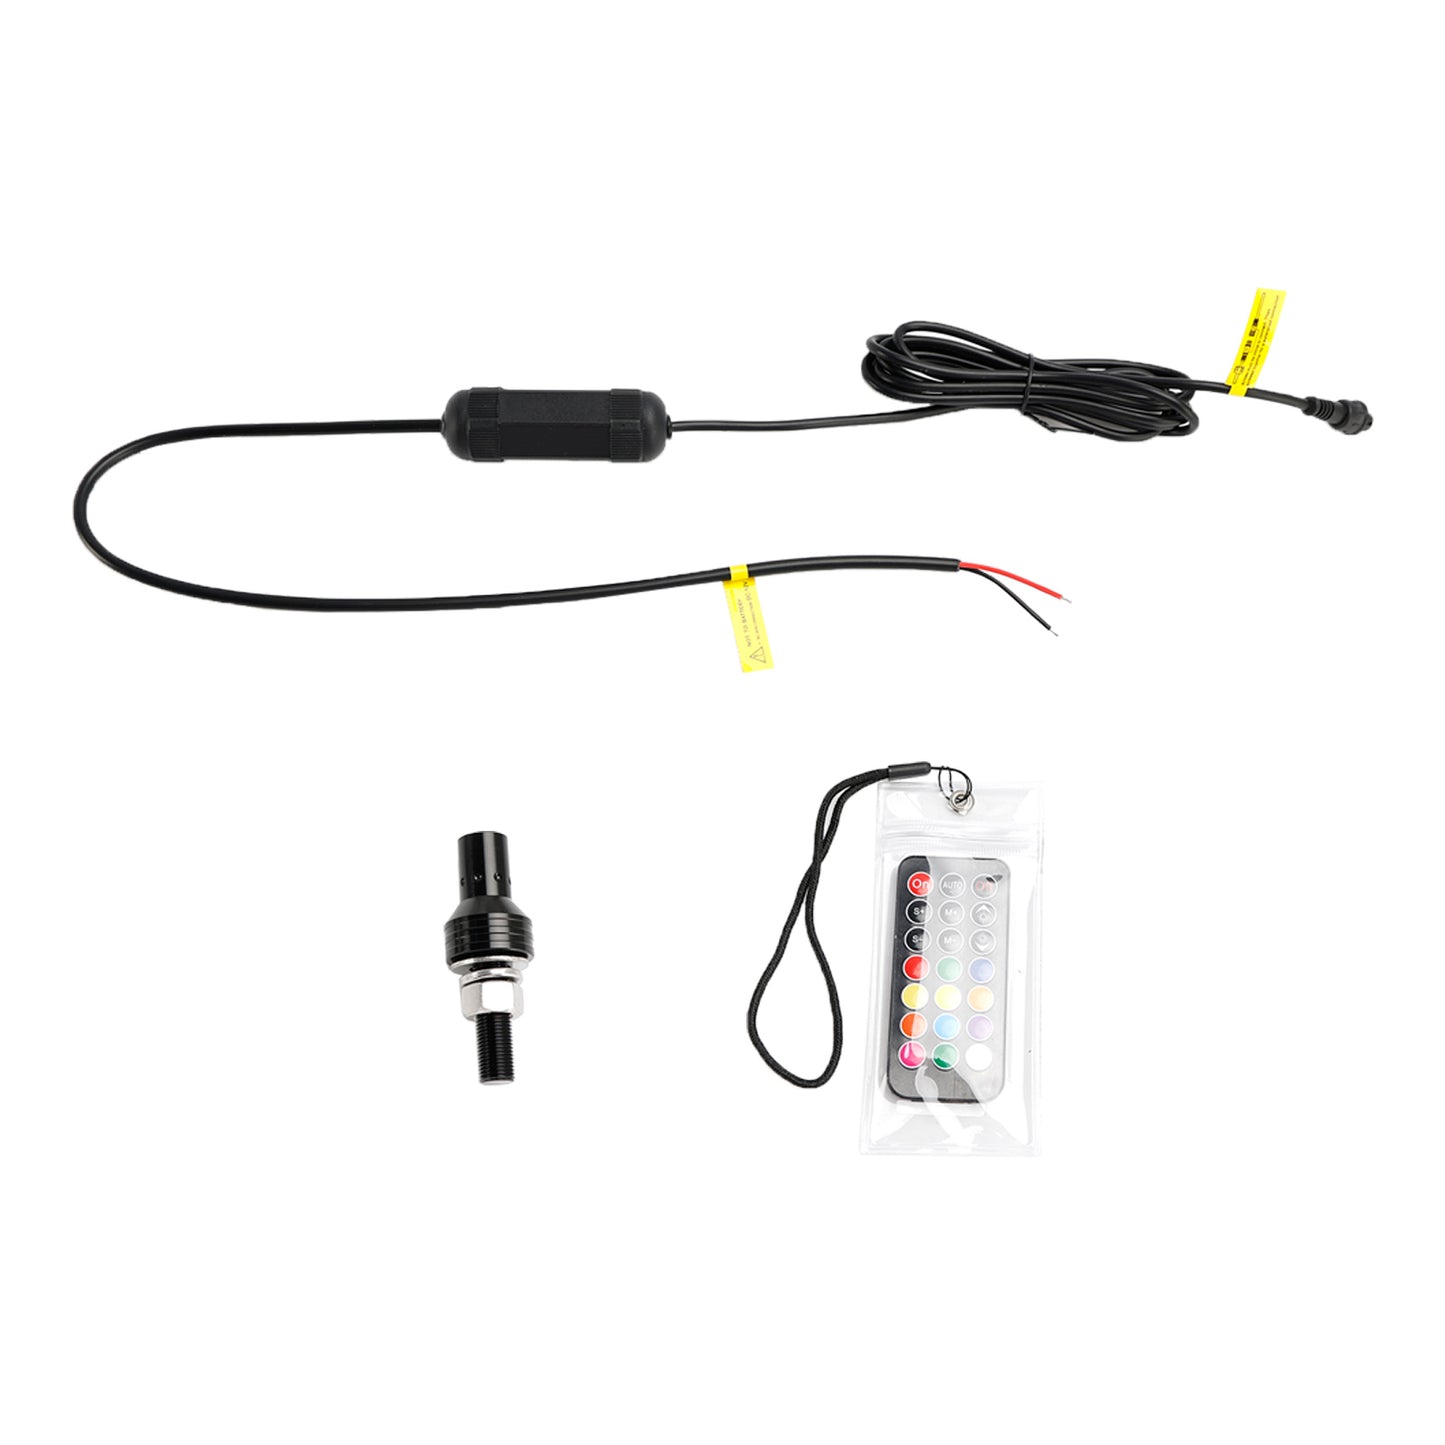 2ft RGB LED APP Whip Lights Antenne mit Flaggenfernbedienung für Polaris UTV ATV